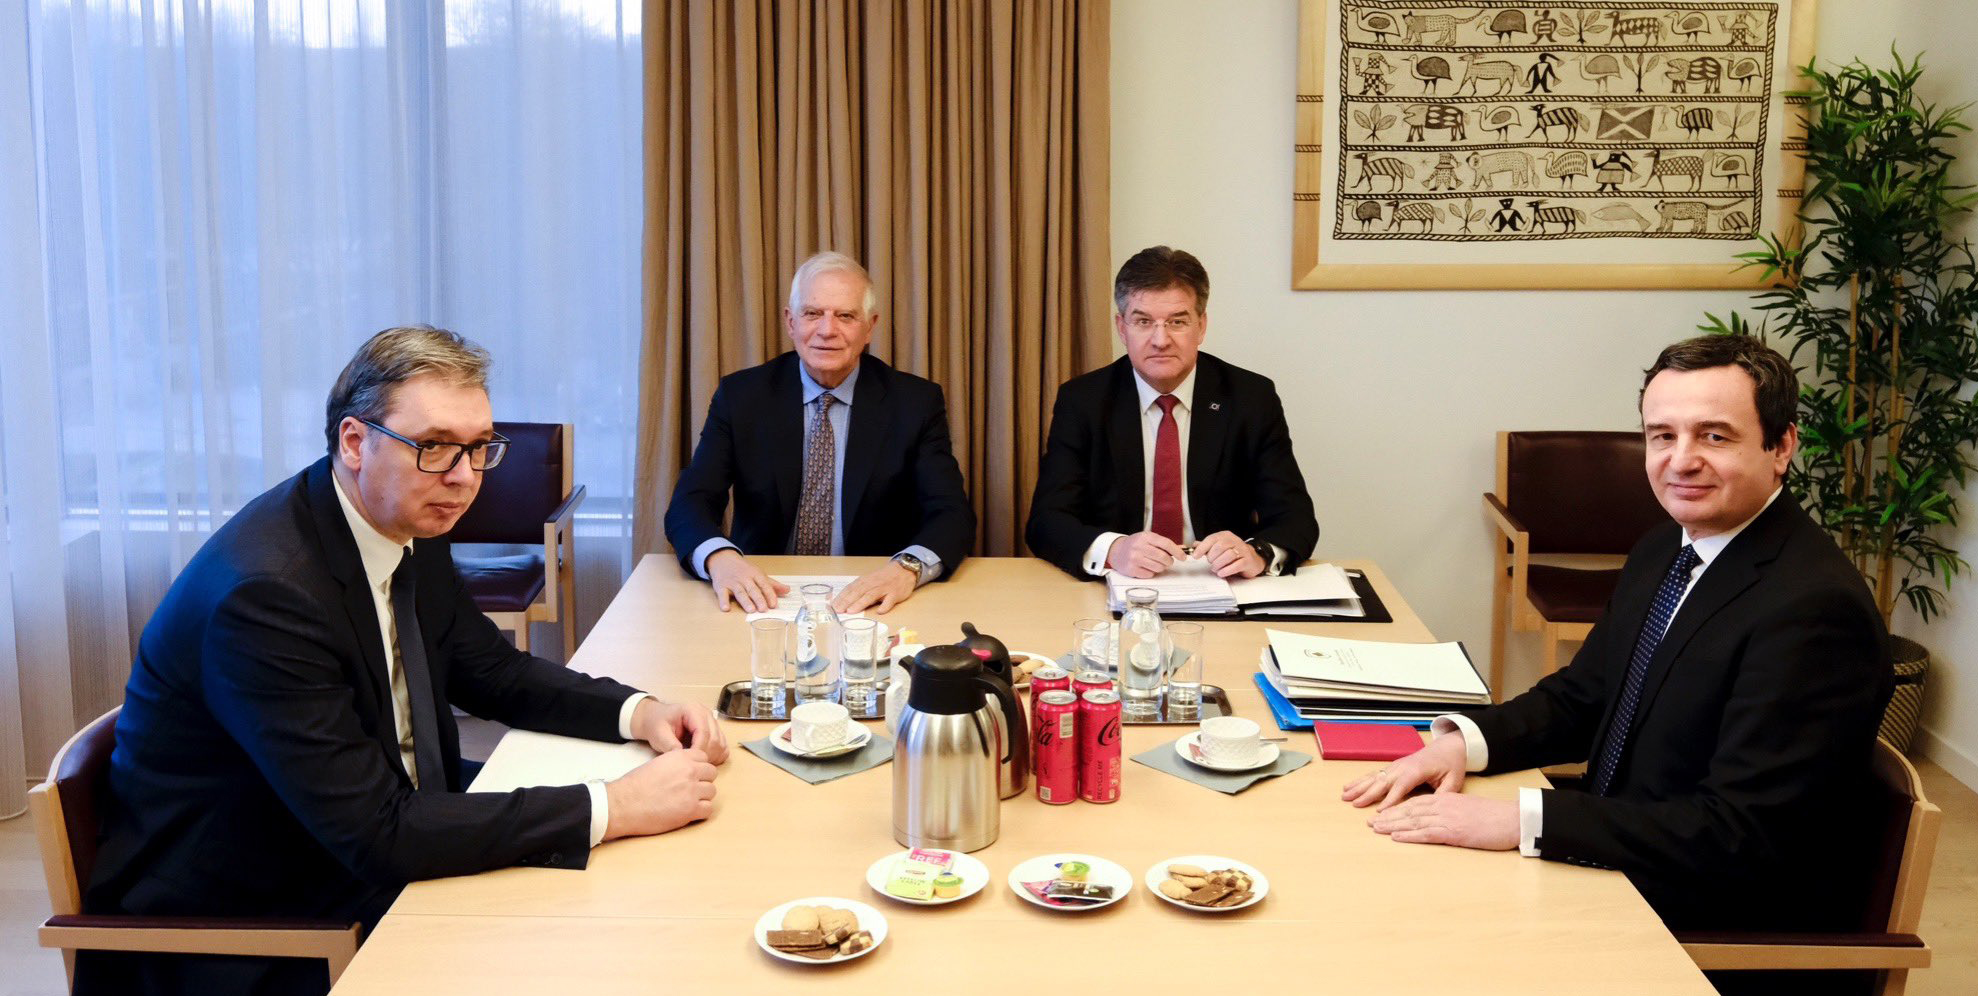 Aleksandar Vučić and Albin Kurti meeting with EU representatives in Brussels